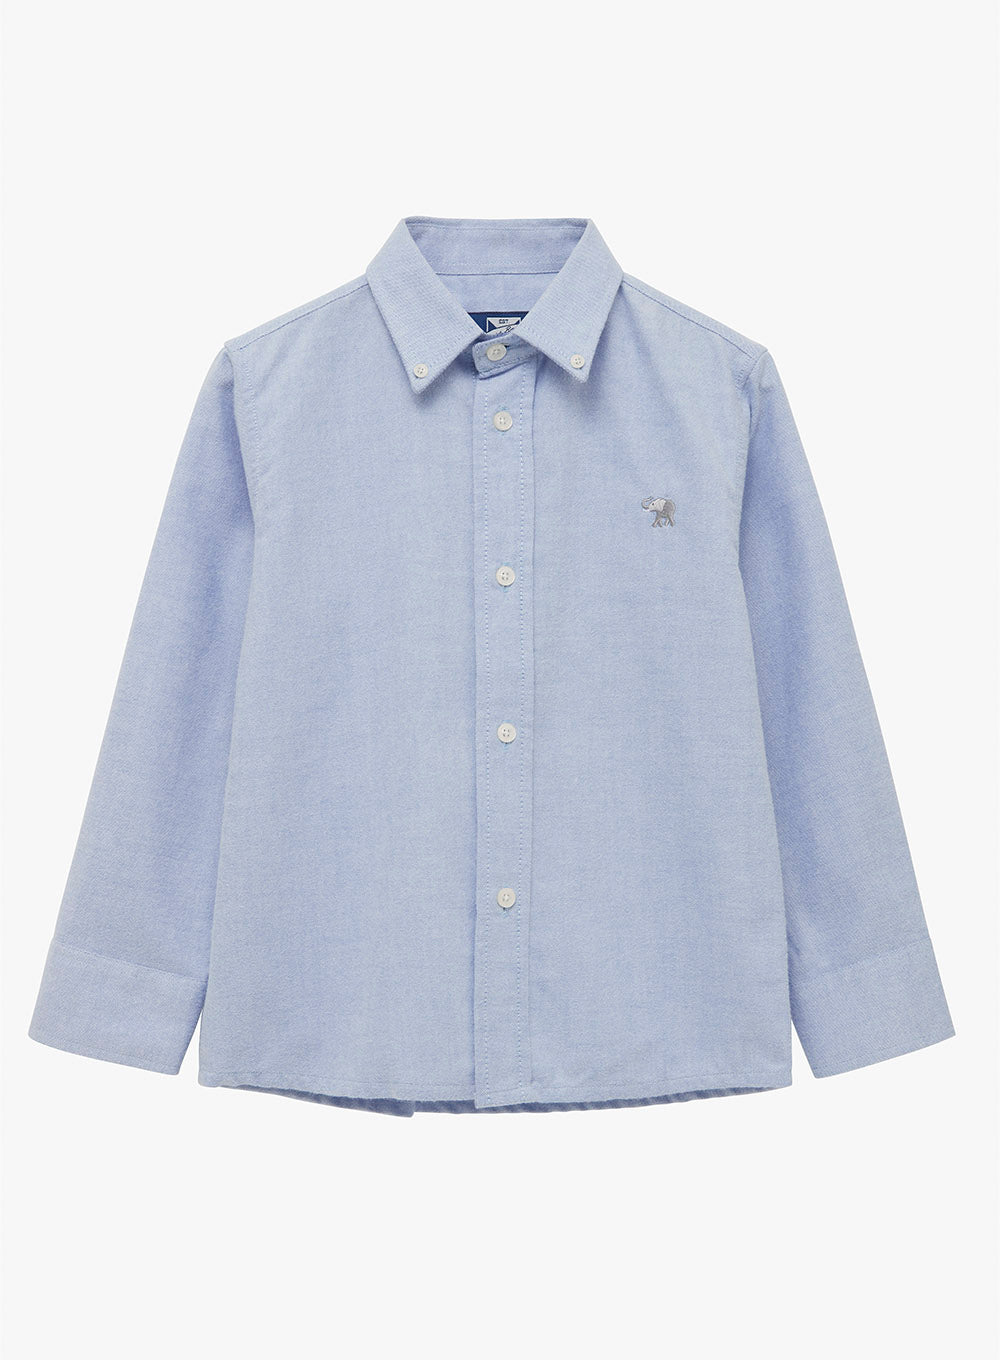 Thomas Shirt in Oxford Blue